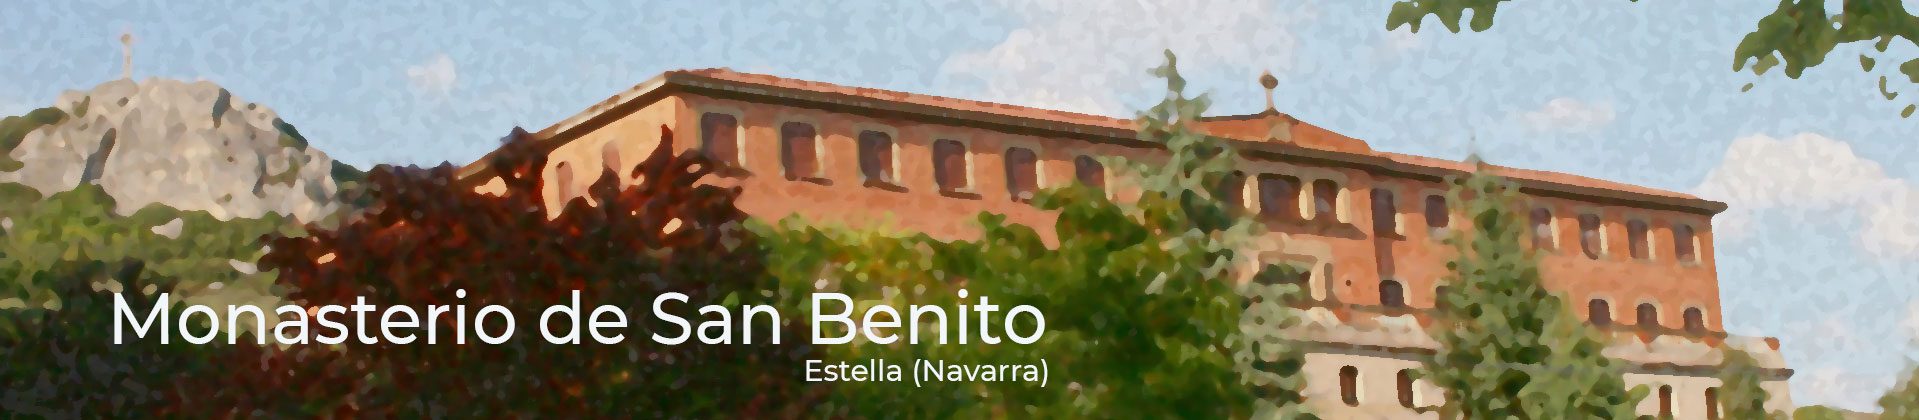 Monasterio San Benito